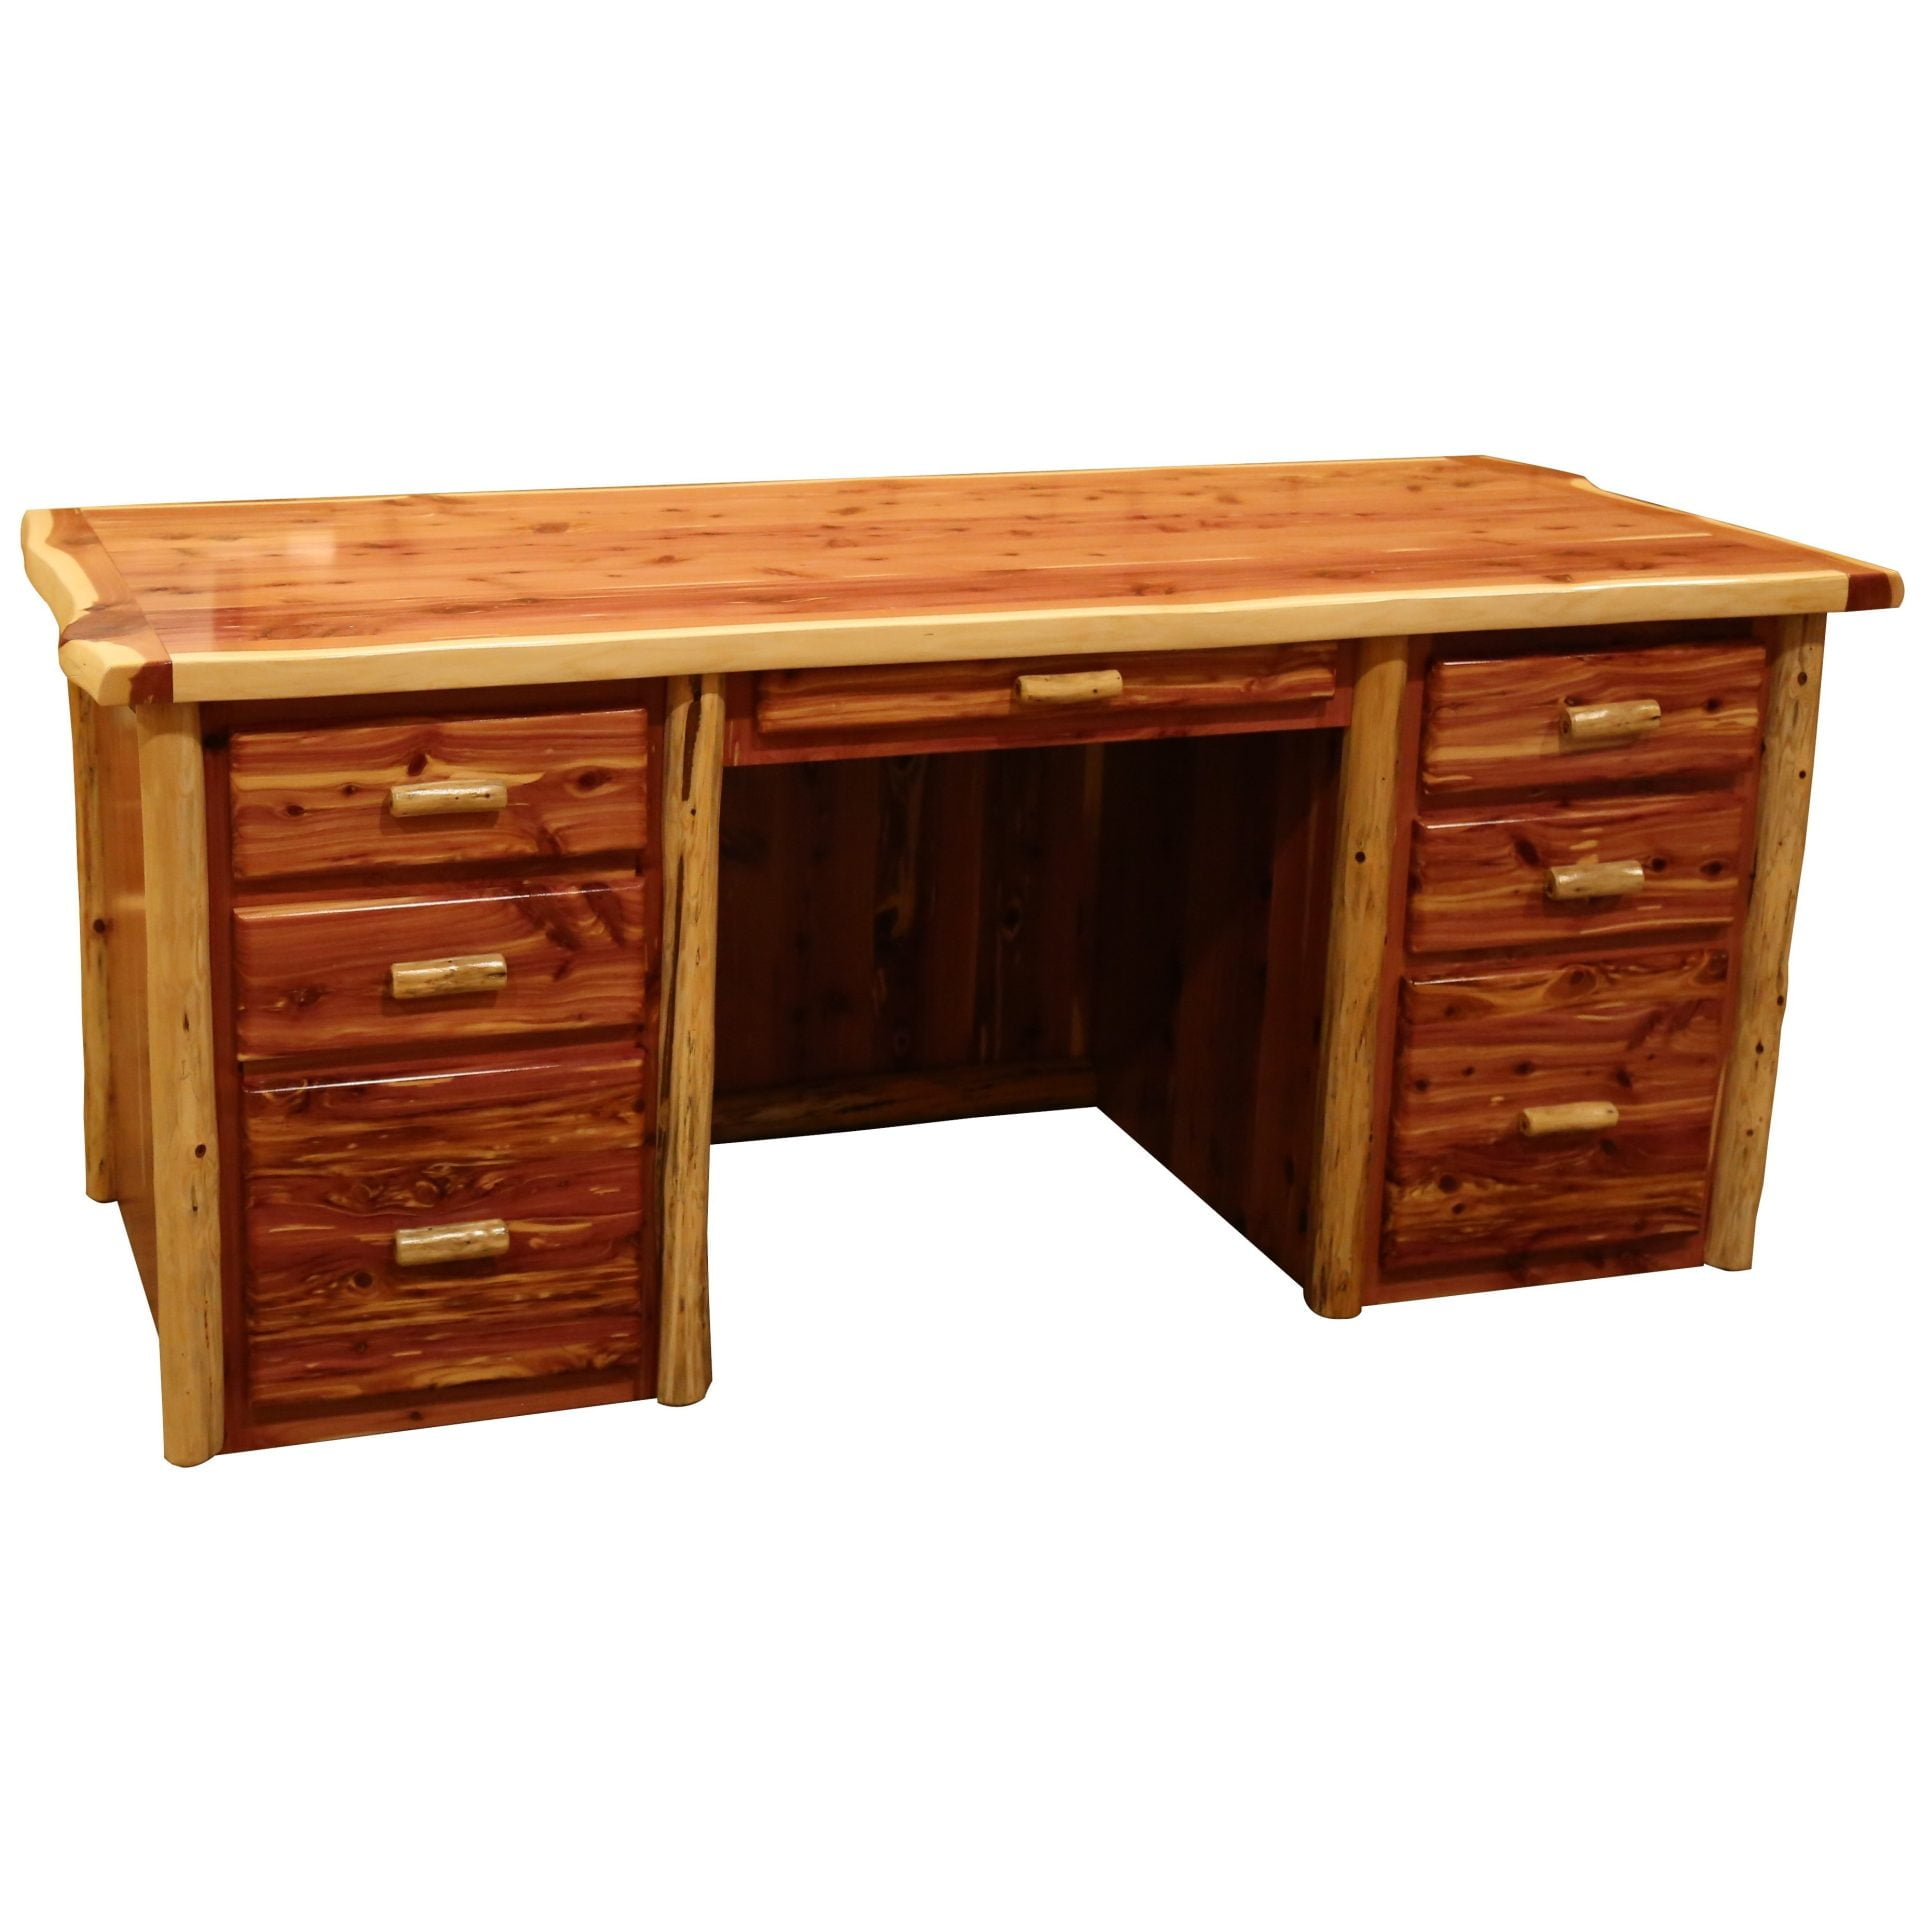 Rustic Red Cedar Log Executive Desk